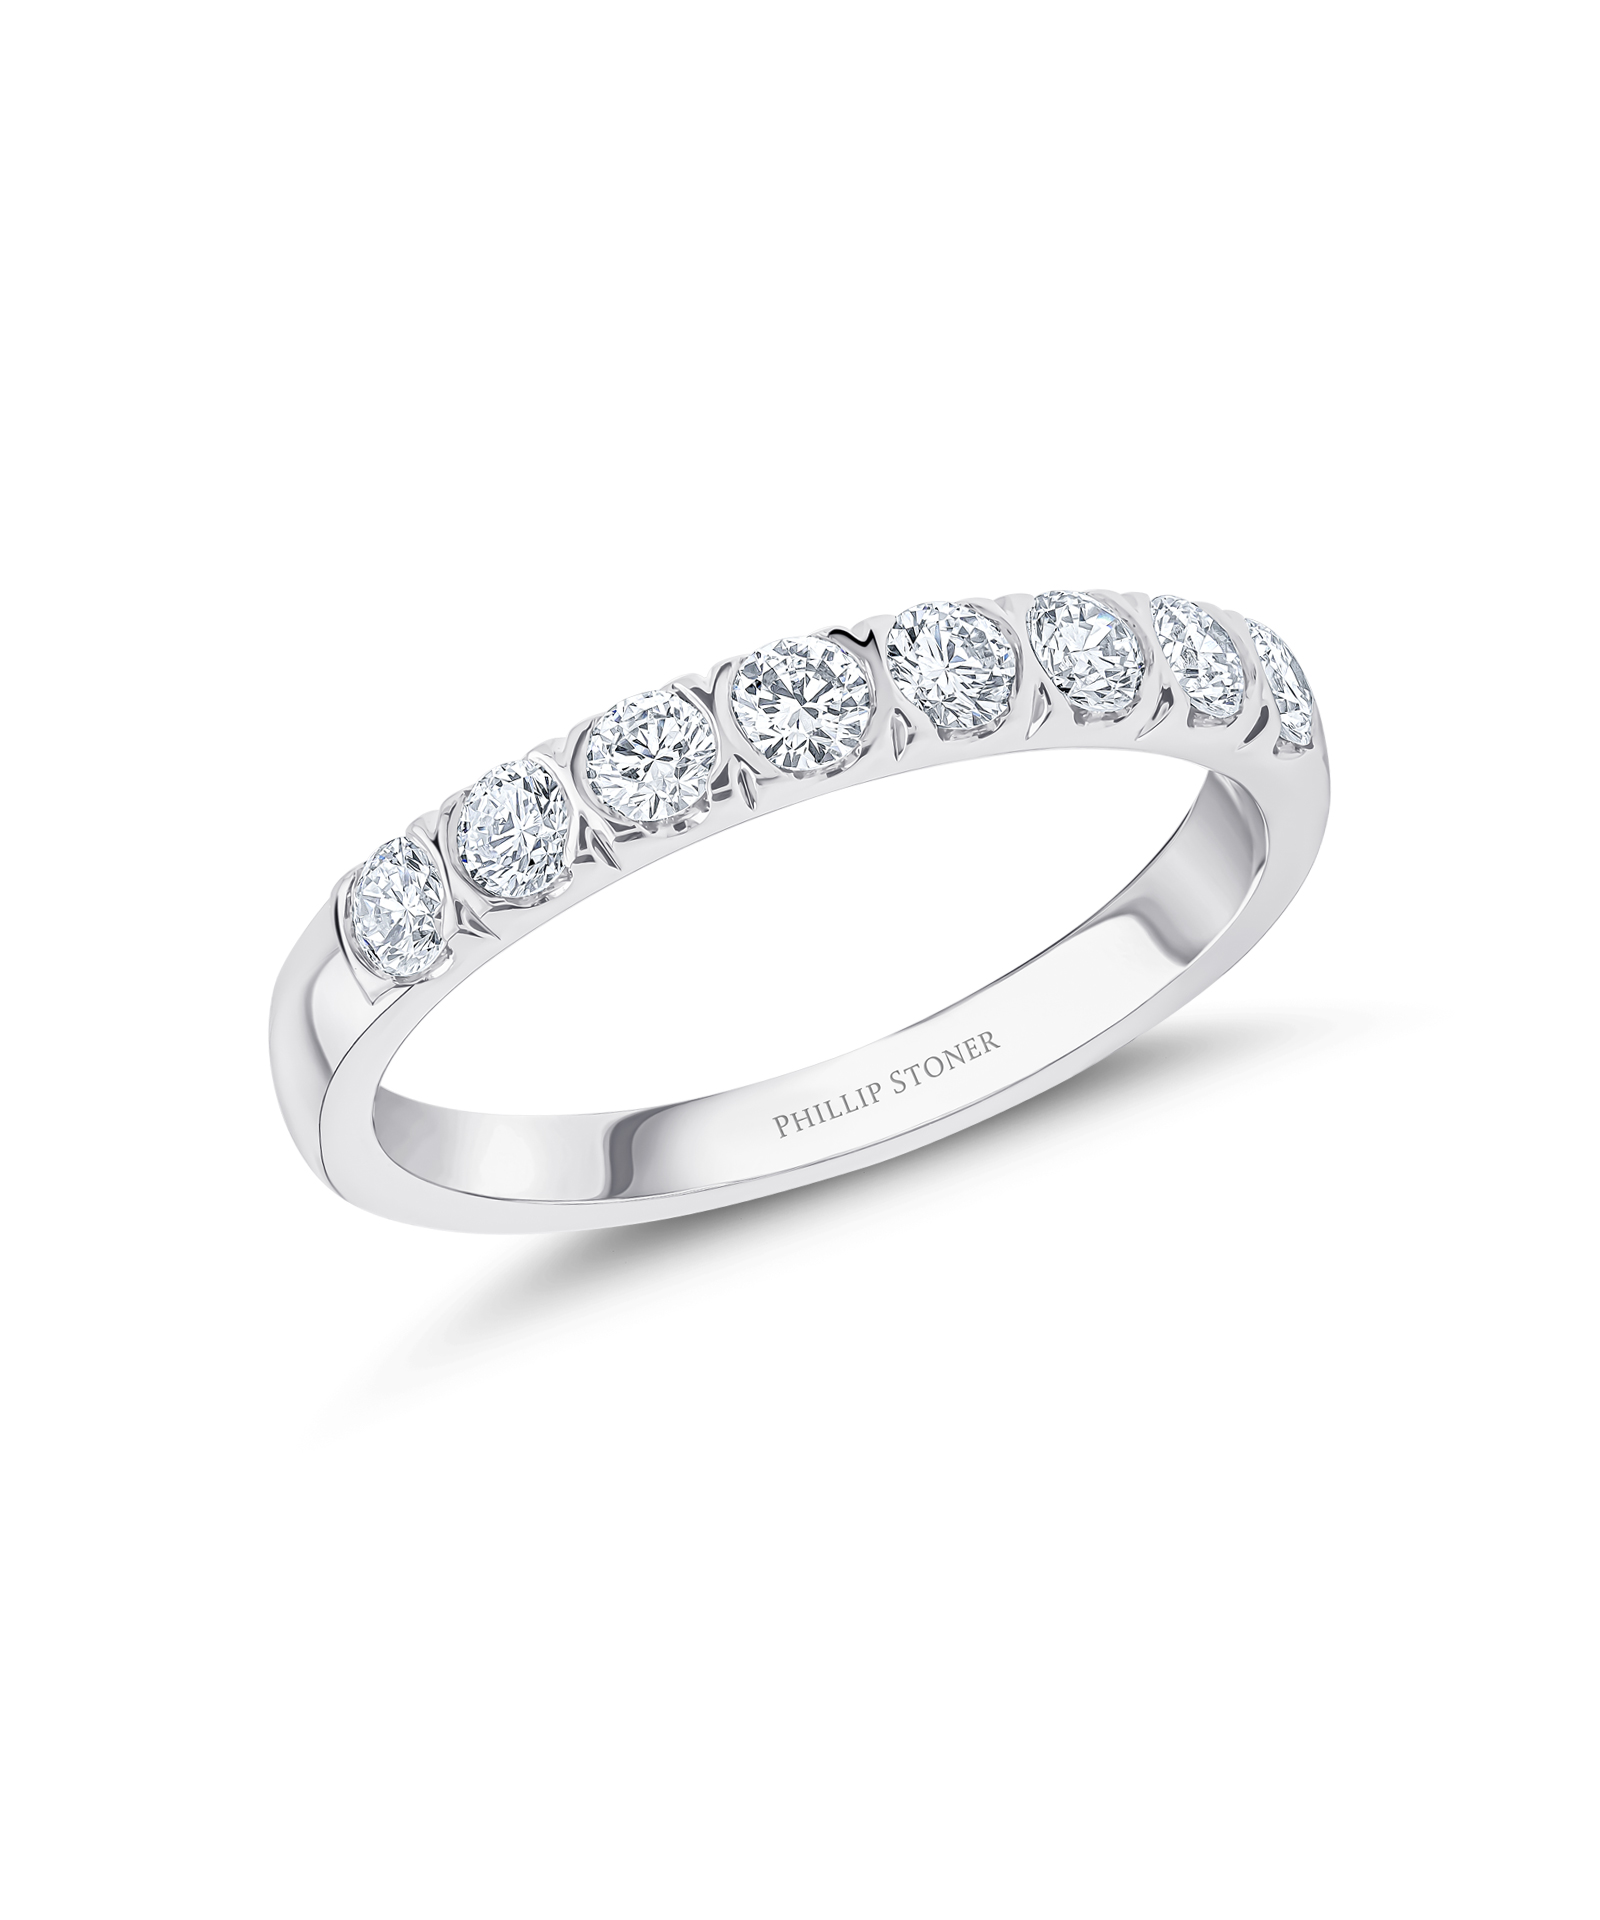 Platinum 0.52ct Semi Rubover-Set Diamond Eternity Ring - Phillip Stoner The Jeweller